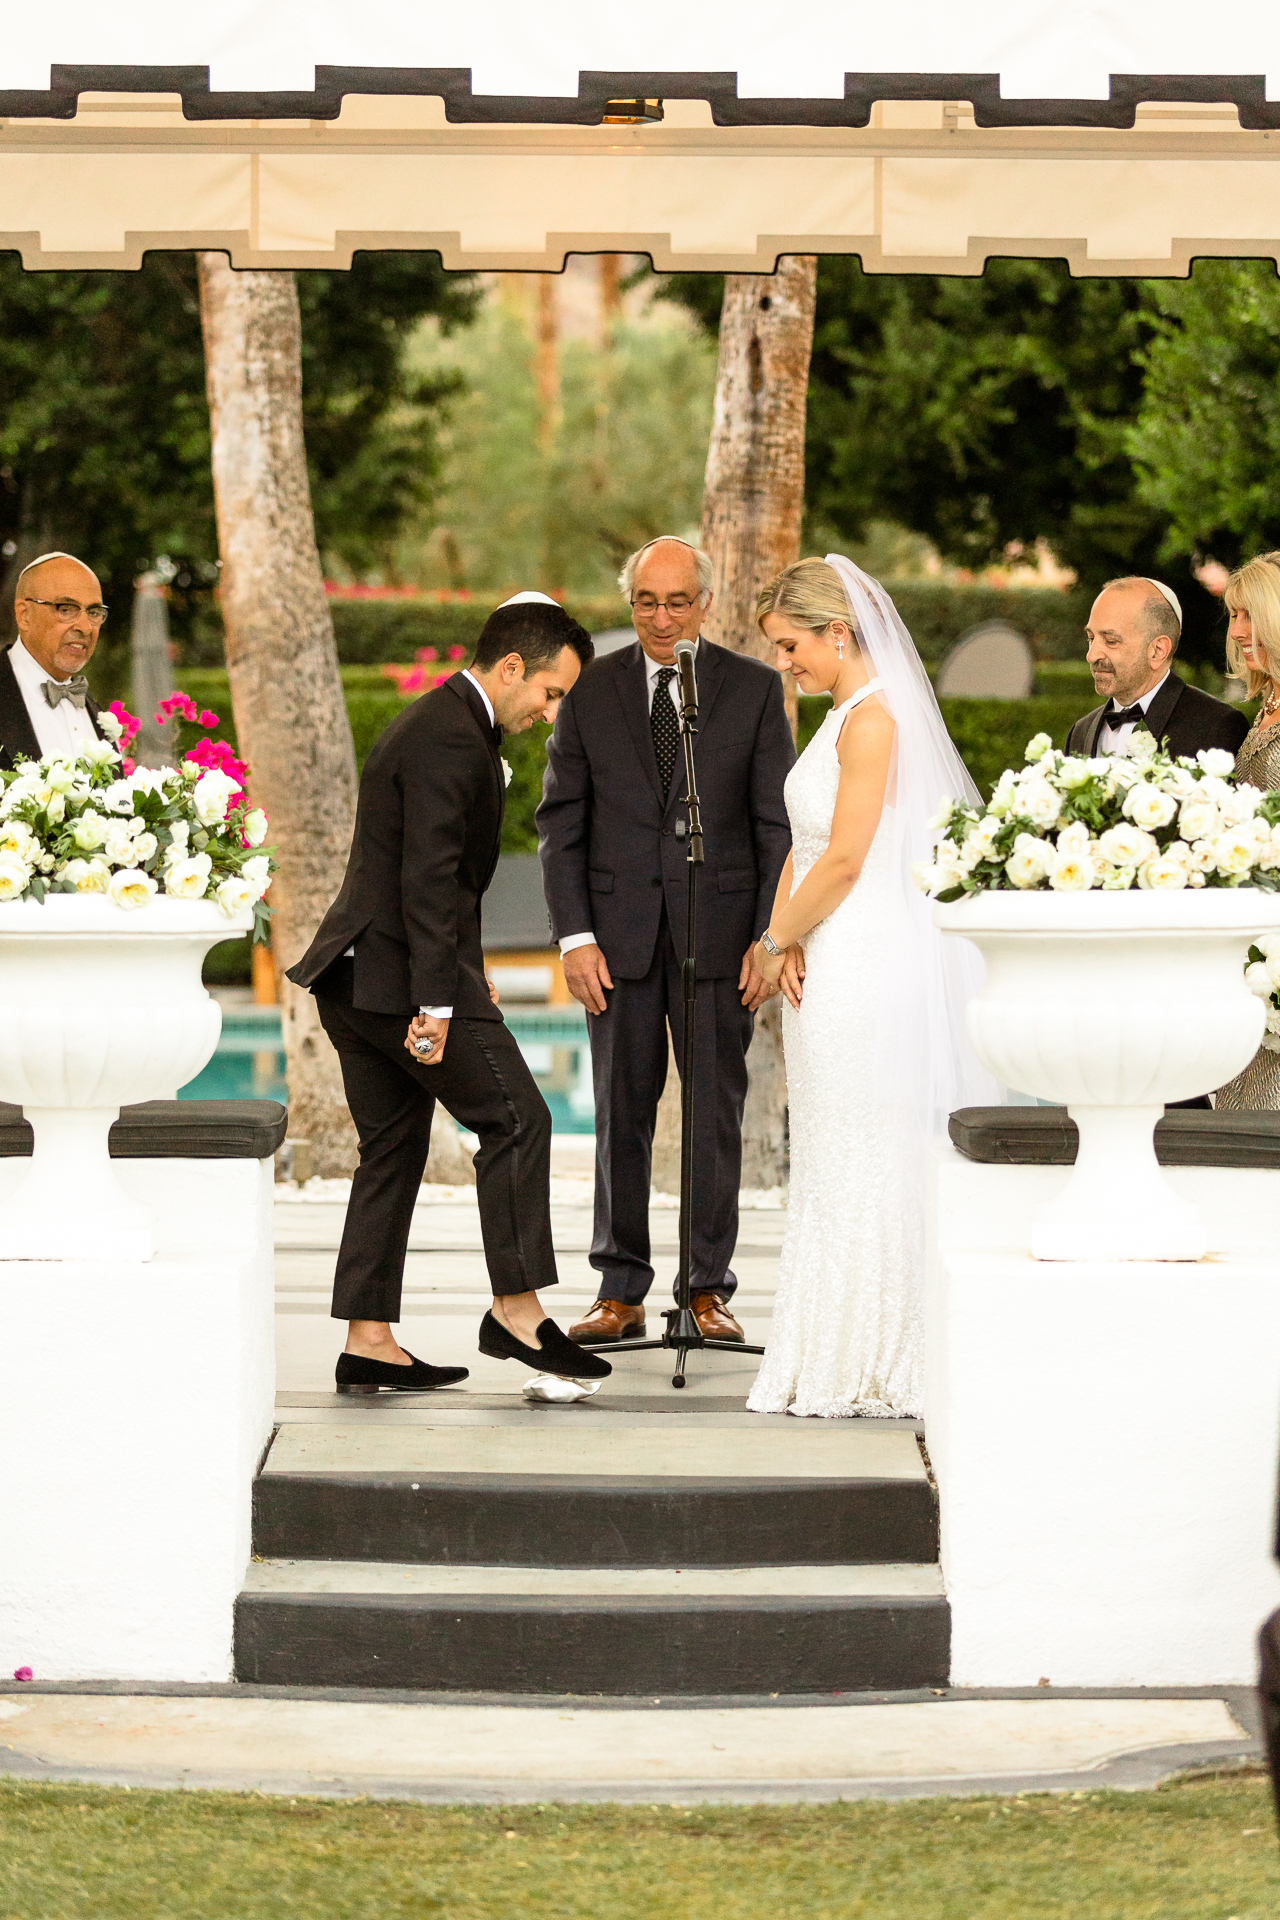 Avalon Hotel wedding, Palm Springs California - groom breaking the glass